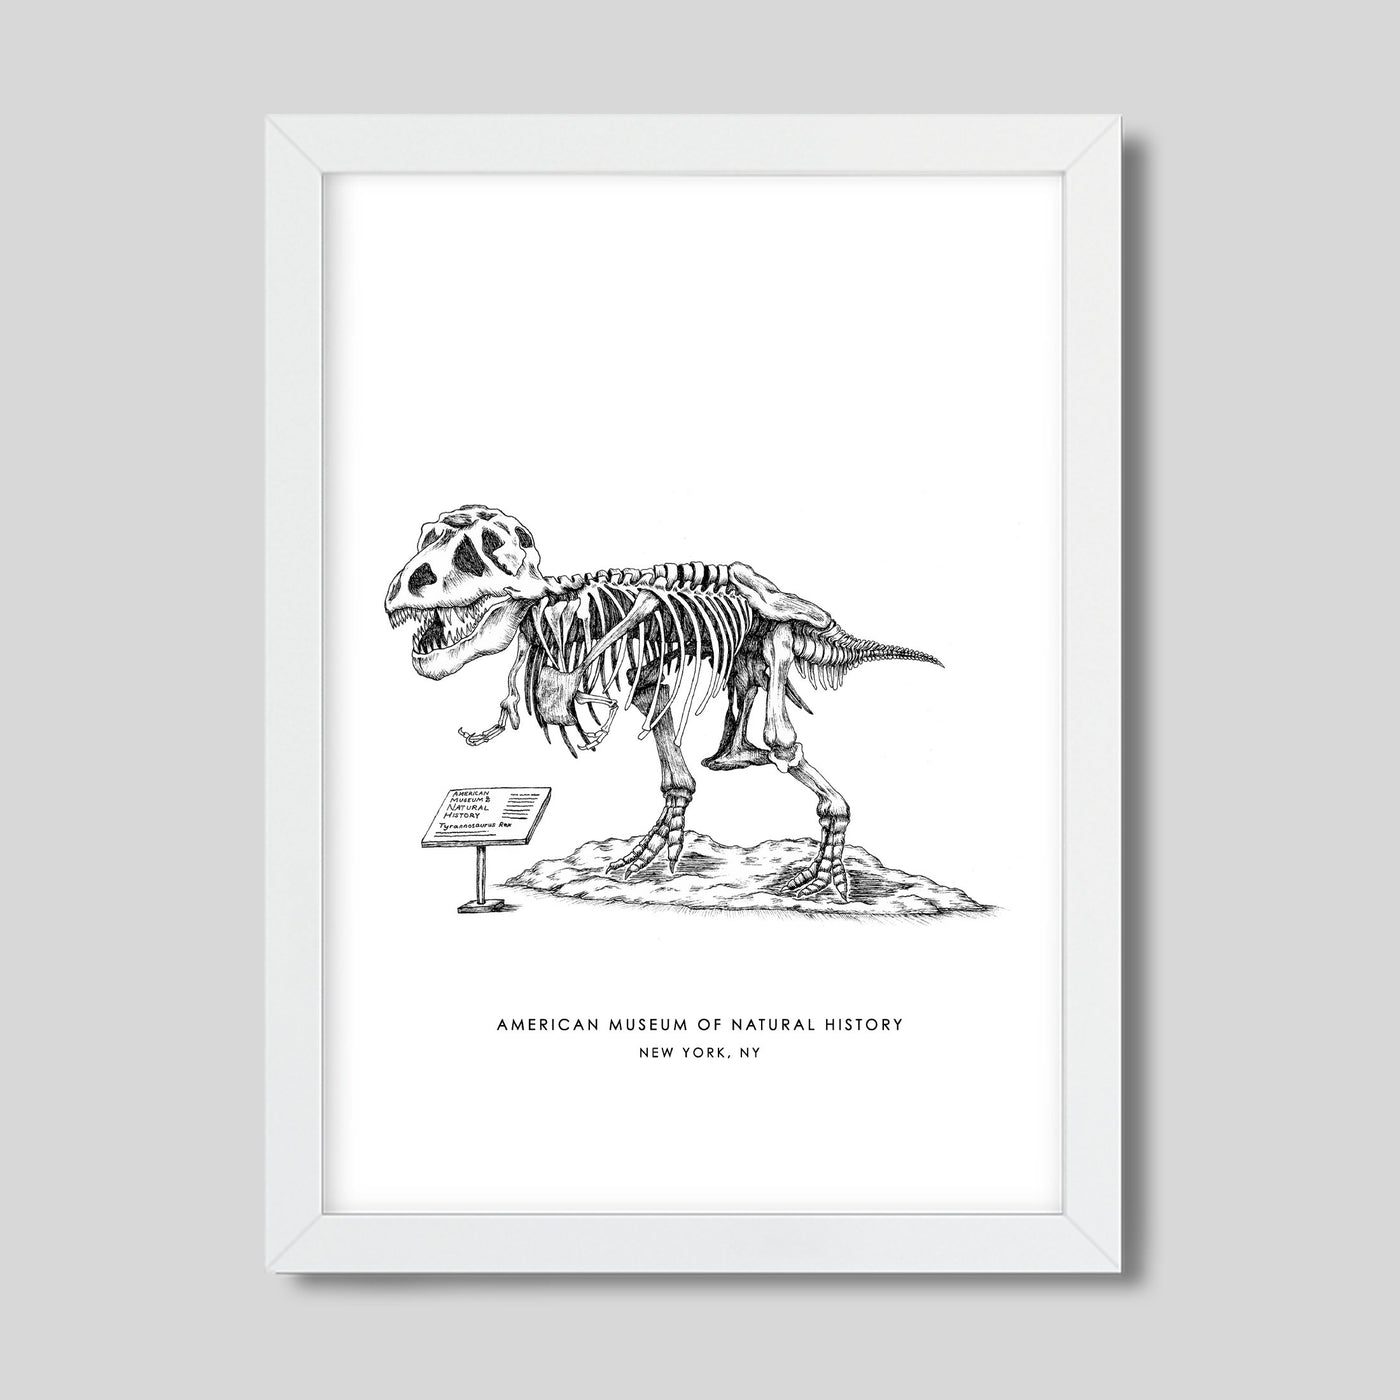 Gallery Prints Black Print / 8x10 / White Frame New York Dinosaur Print Katie Kime